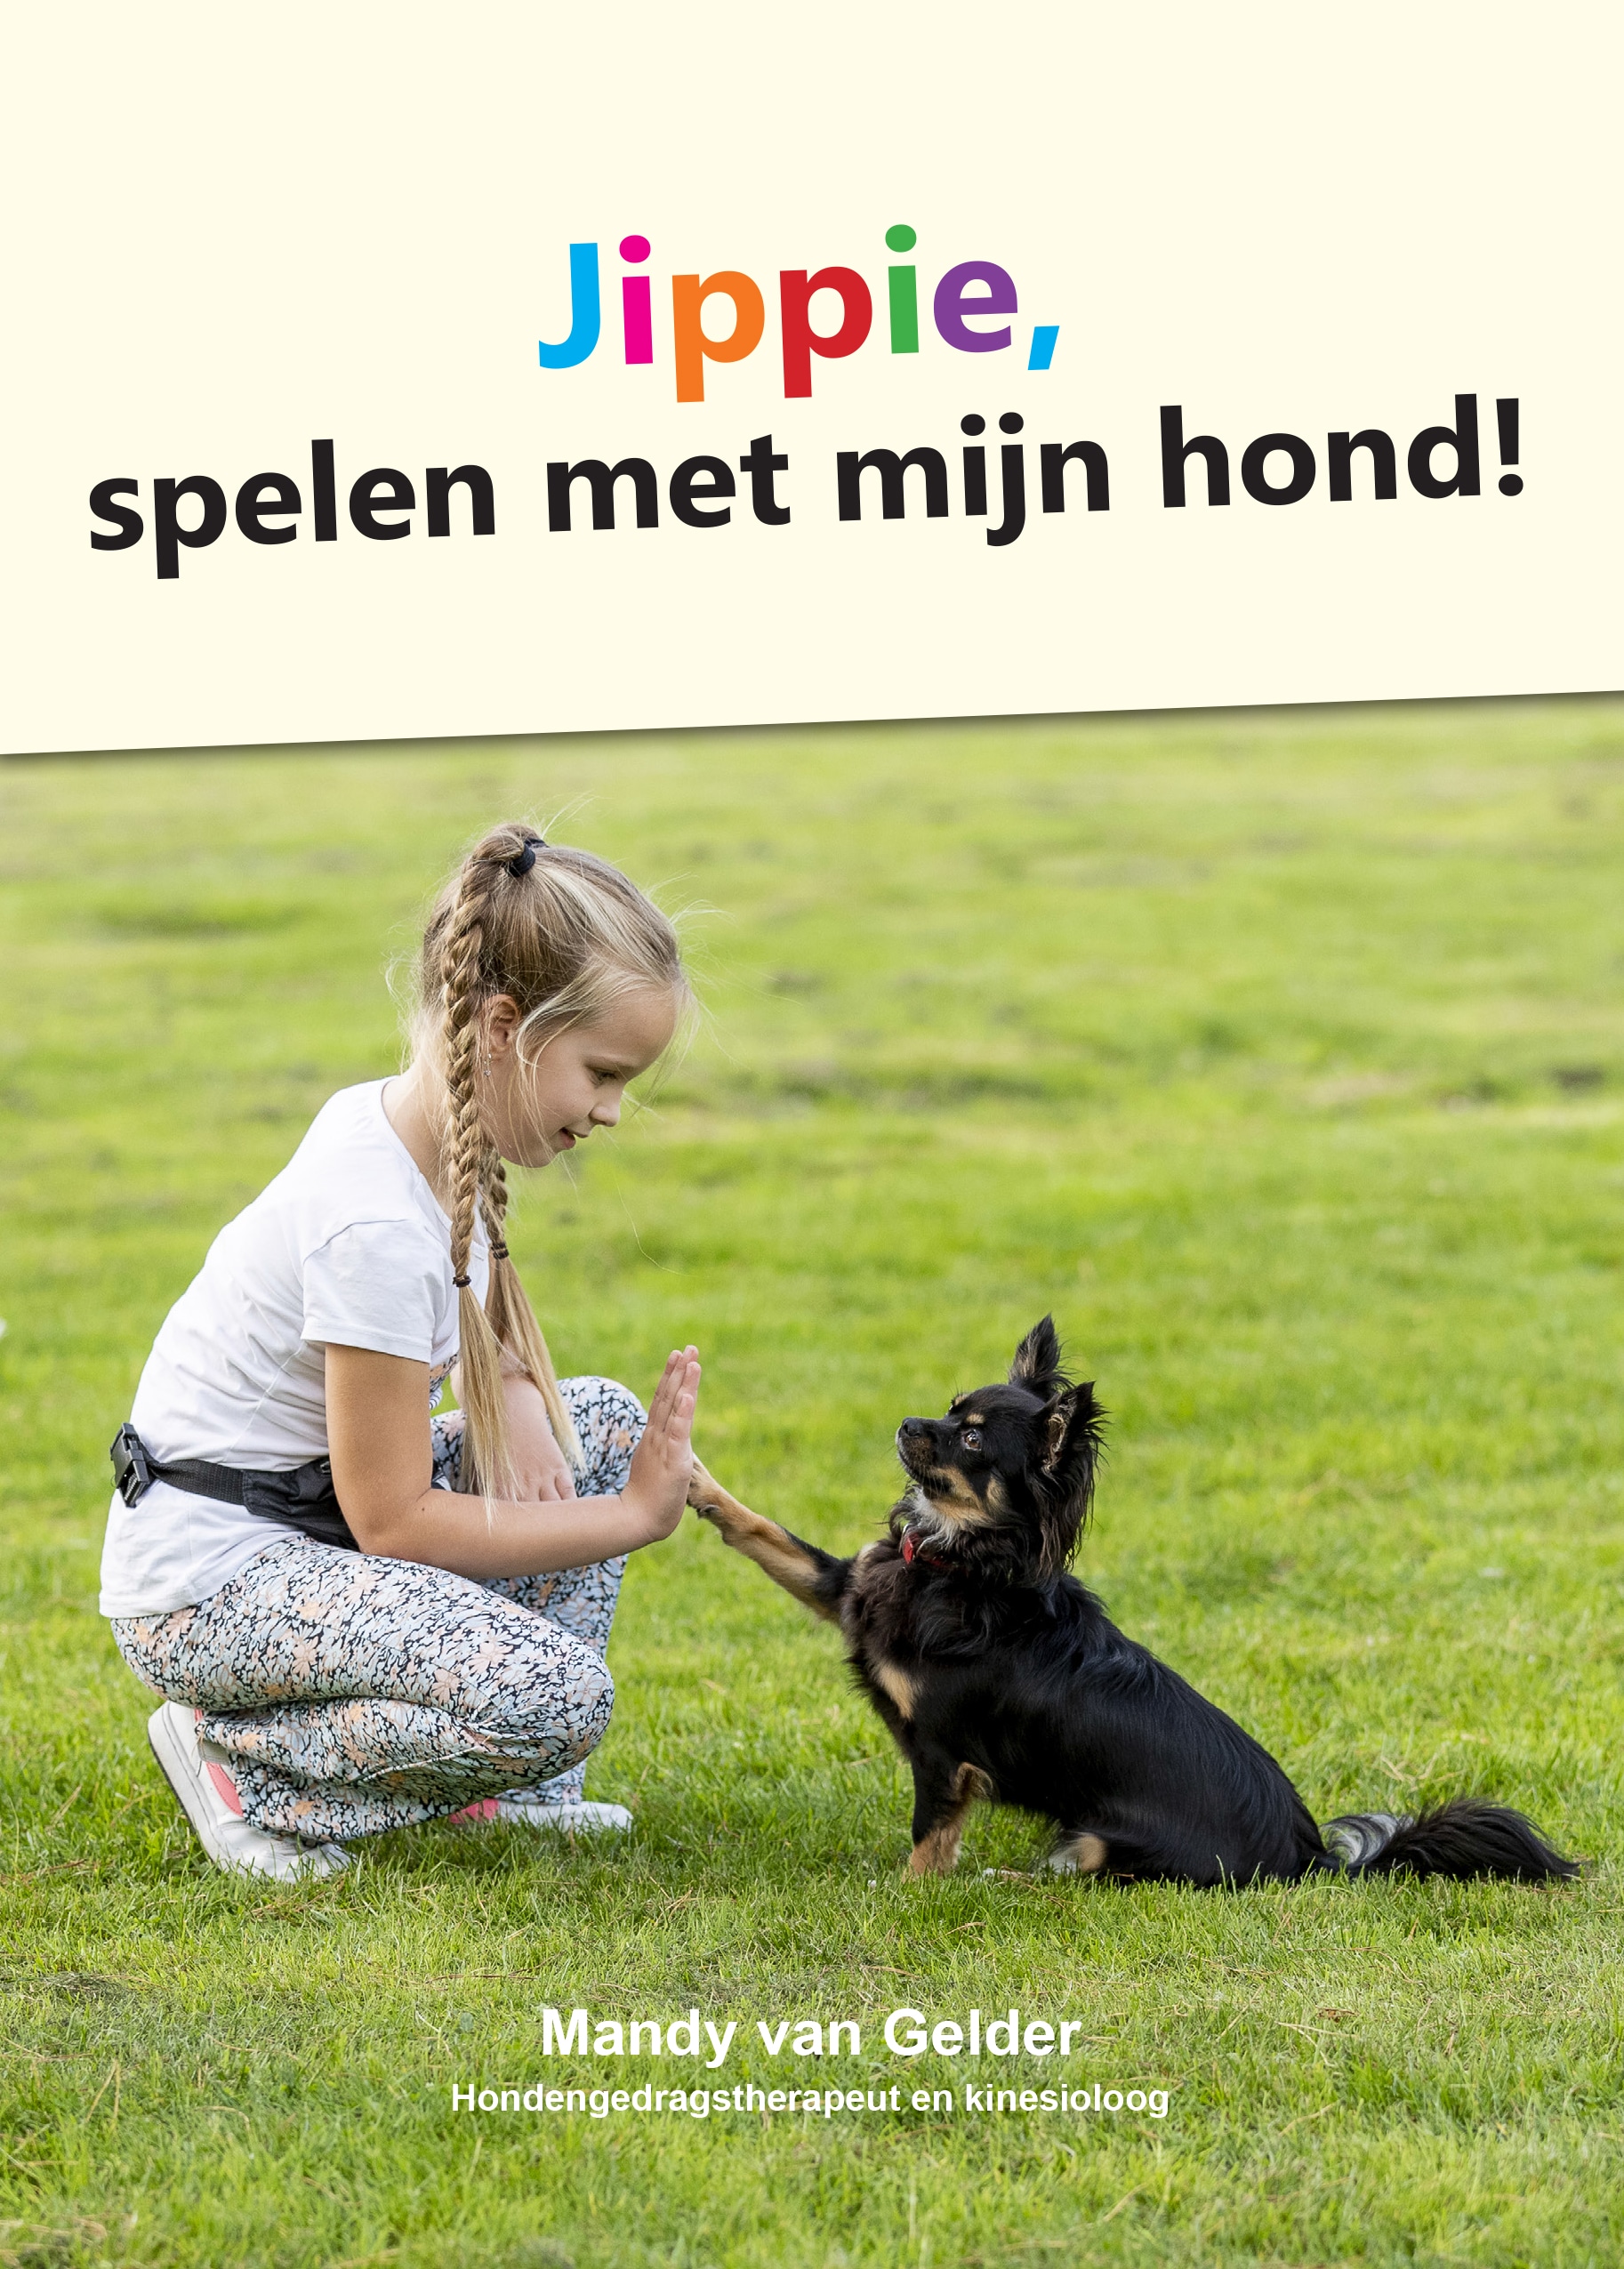 https://hondencentrumwraf.nl/wp-content/uploads/2022/01/Jippie-spelen-met-mijn-hond-Front-STILL.jpg